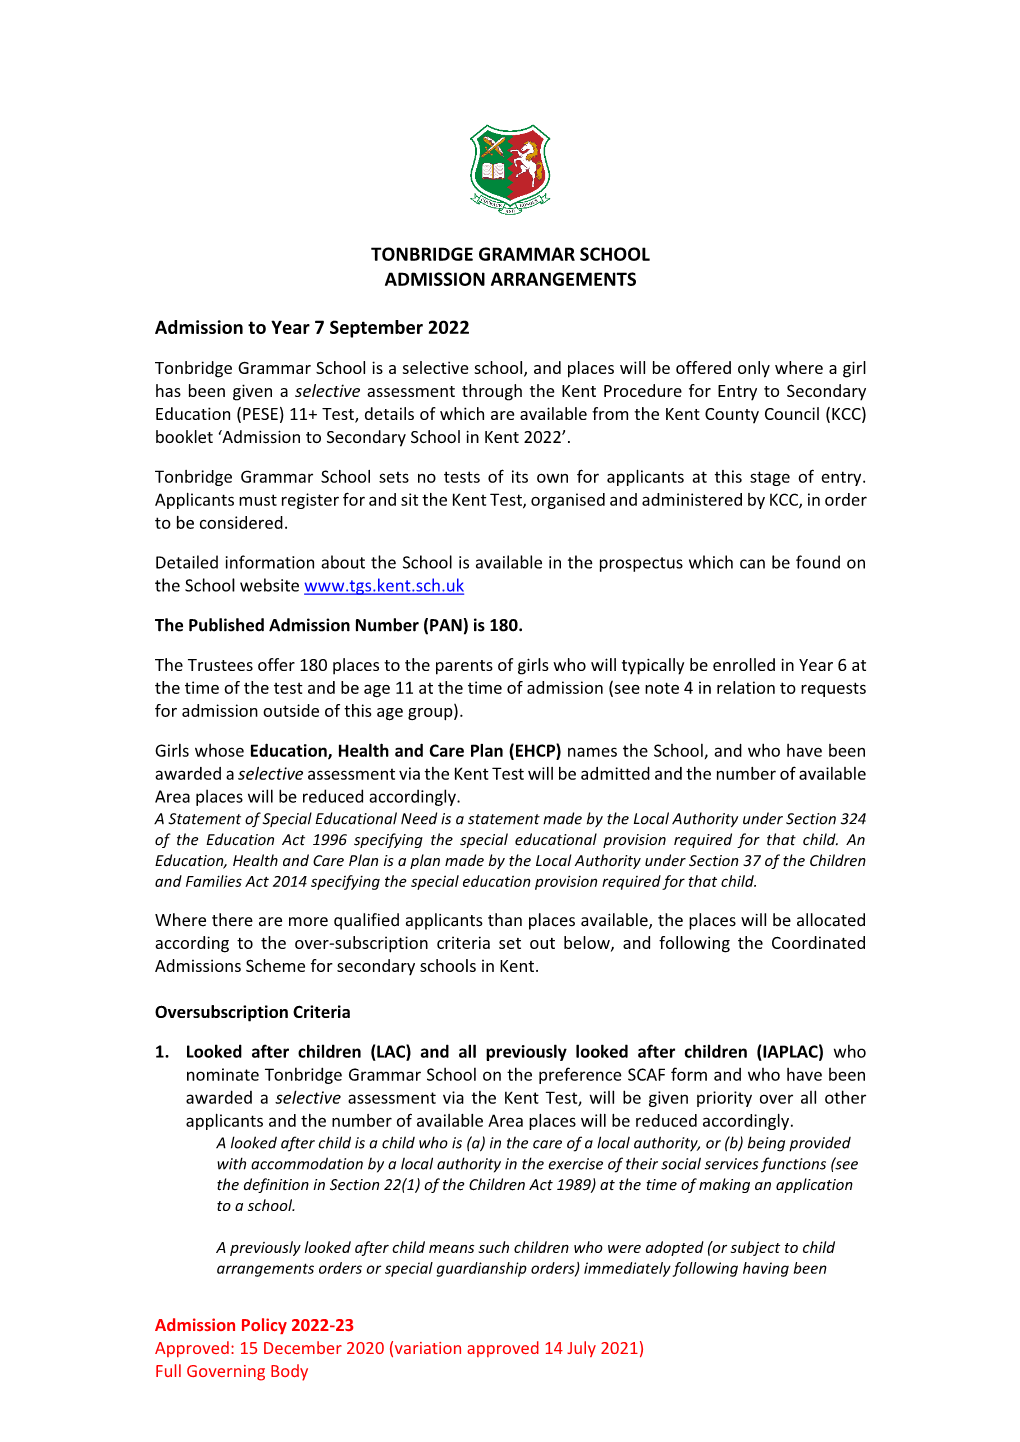 Tonbridge Grammar School Admission Arrangements